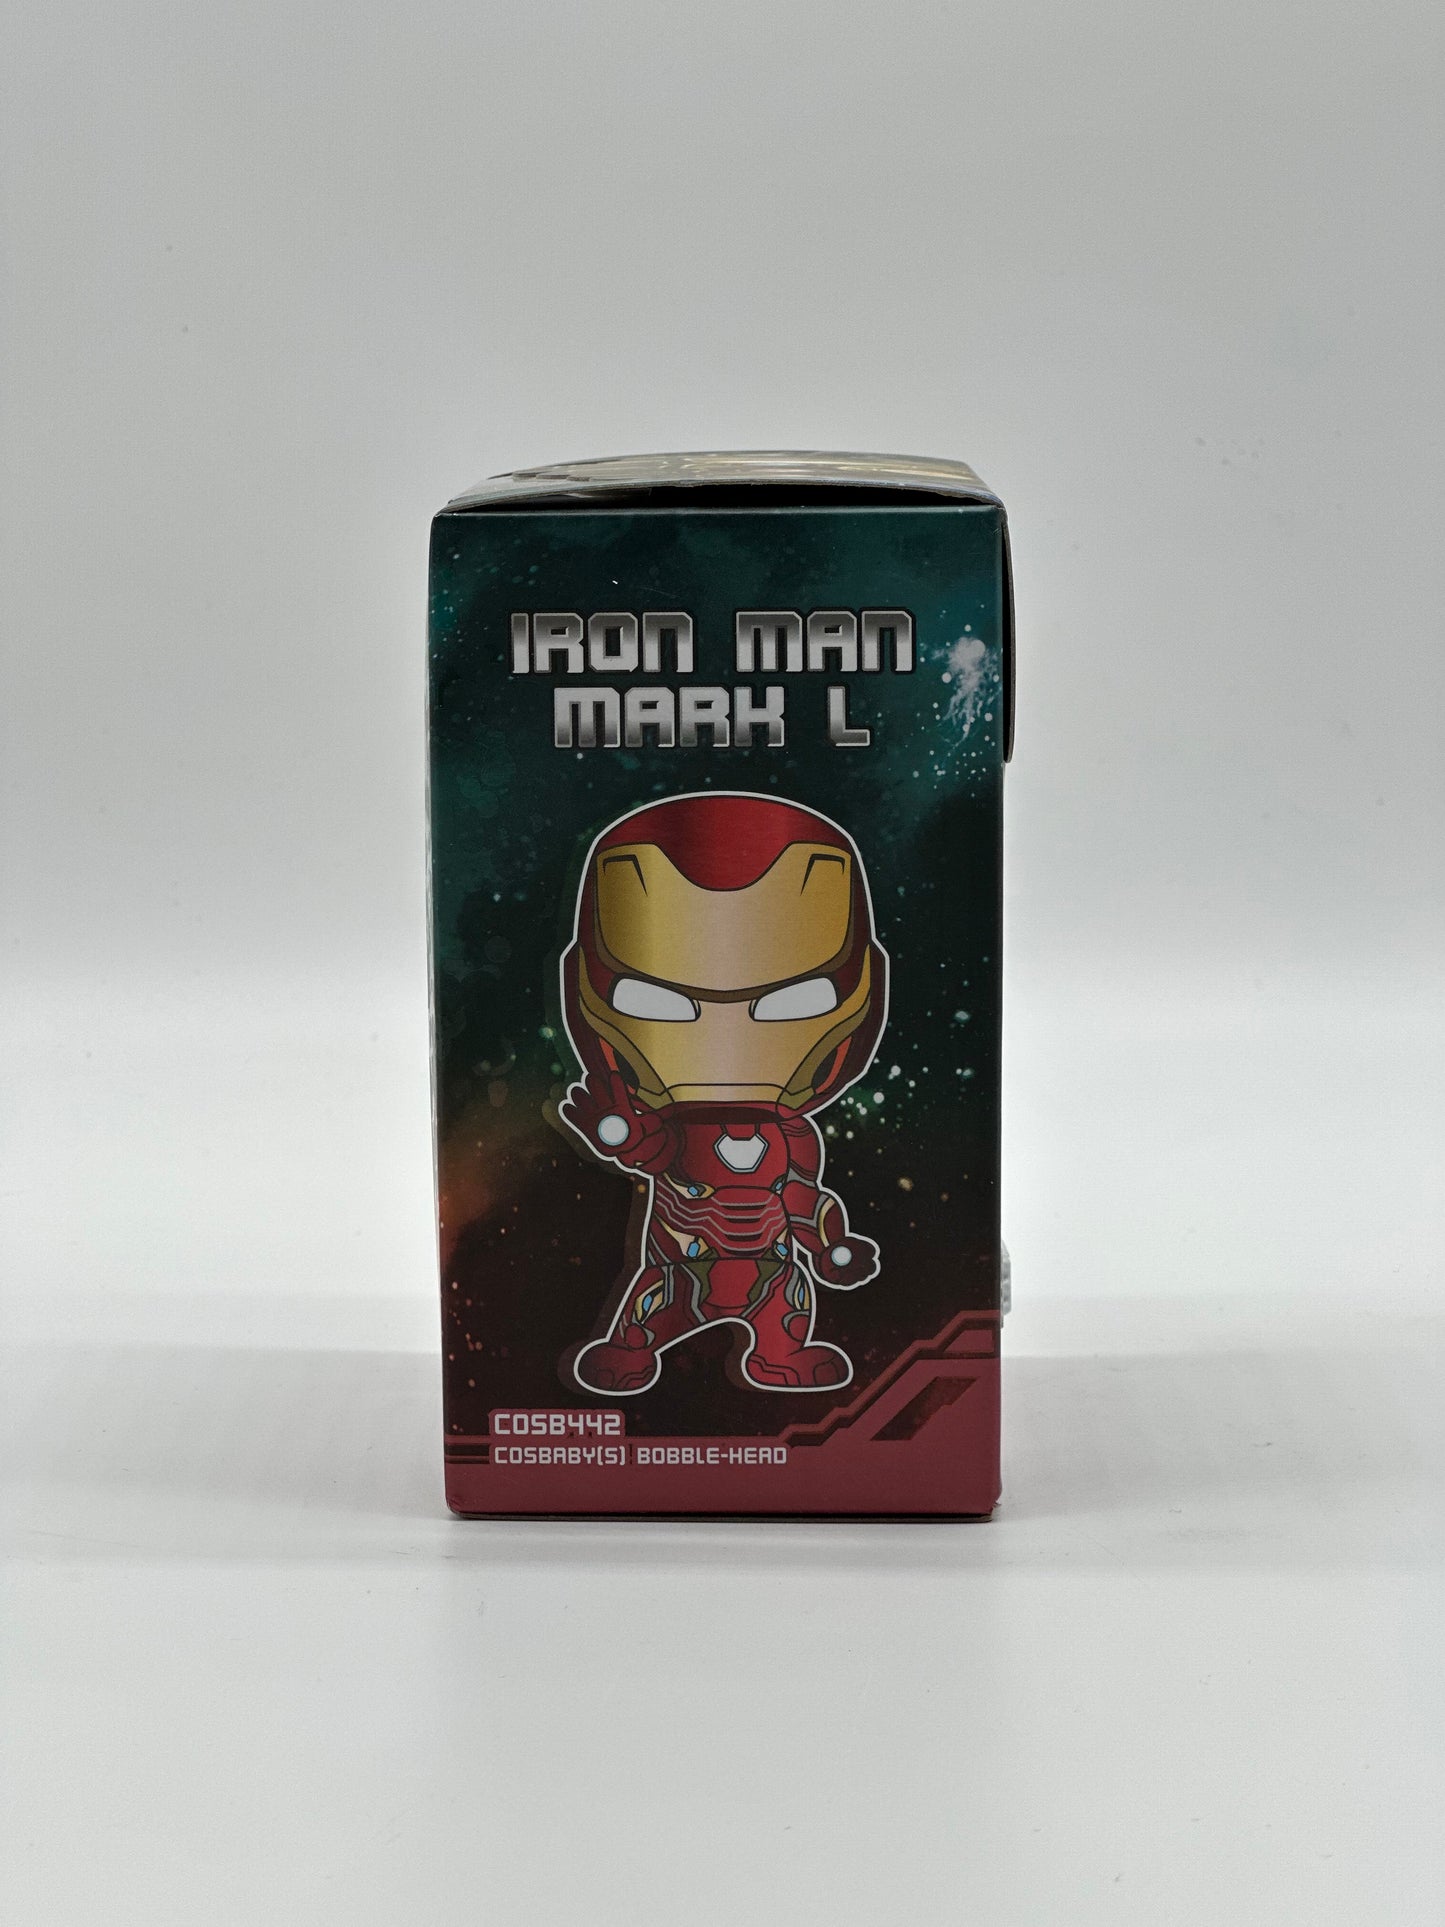 Cosbabys Marvel Avengers Infinity War Iron Man Mark L